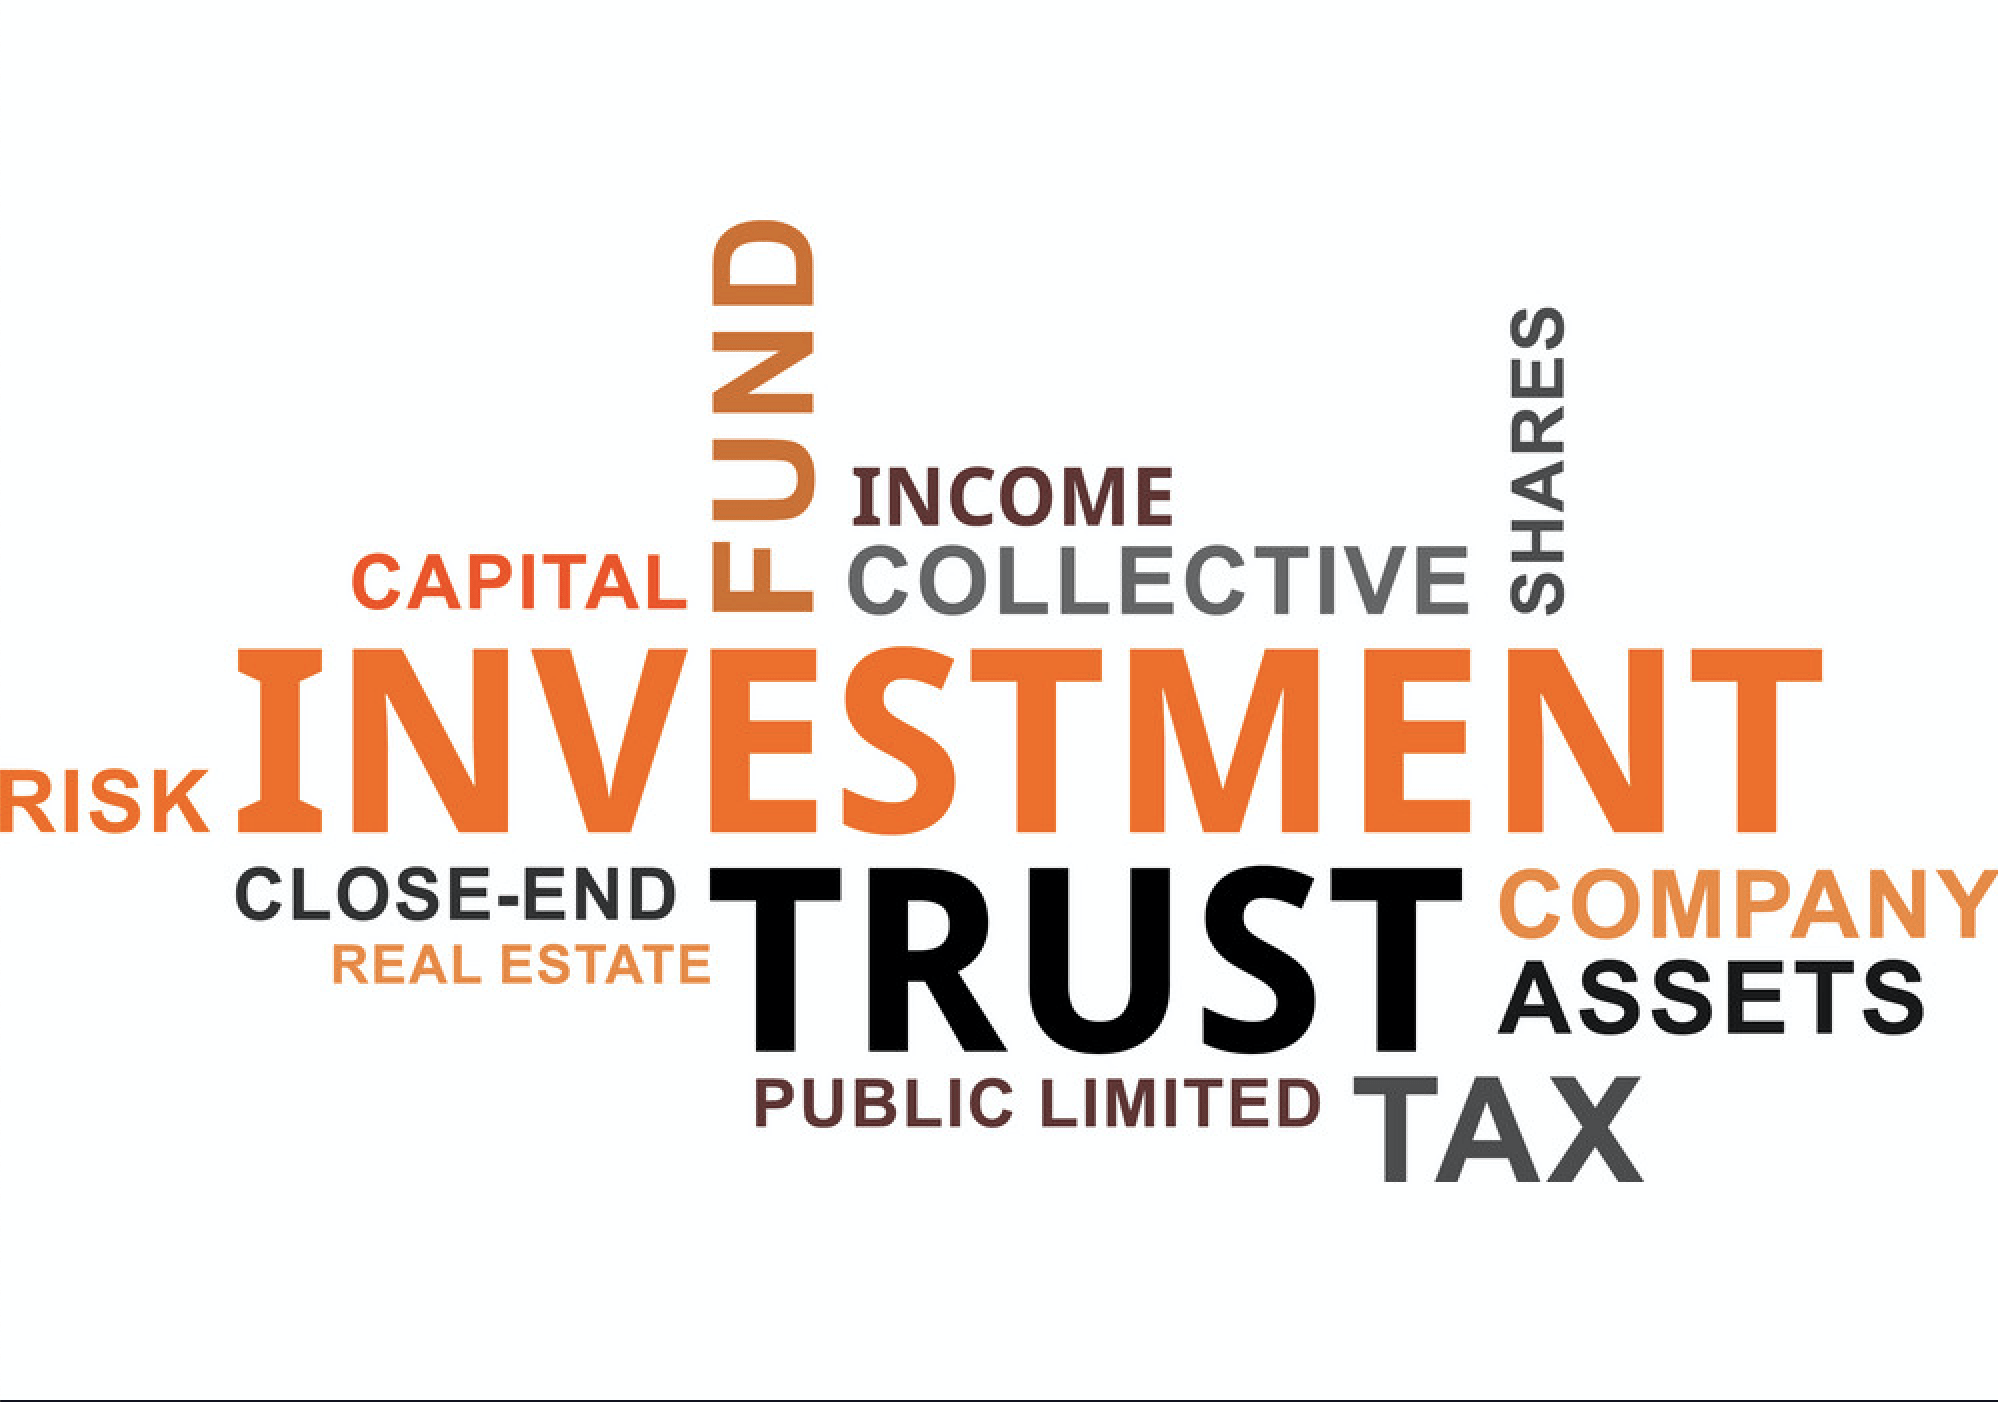 International investment trust